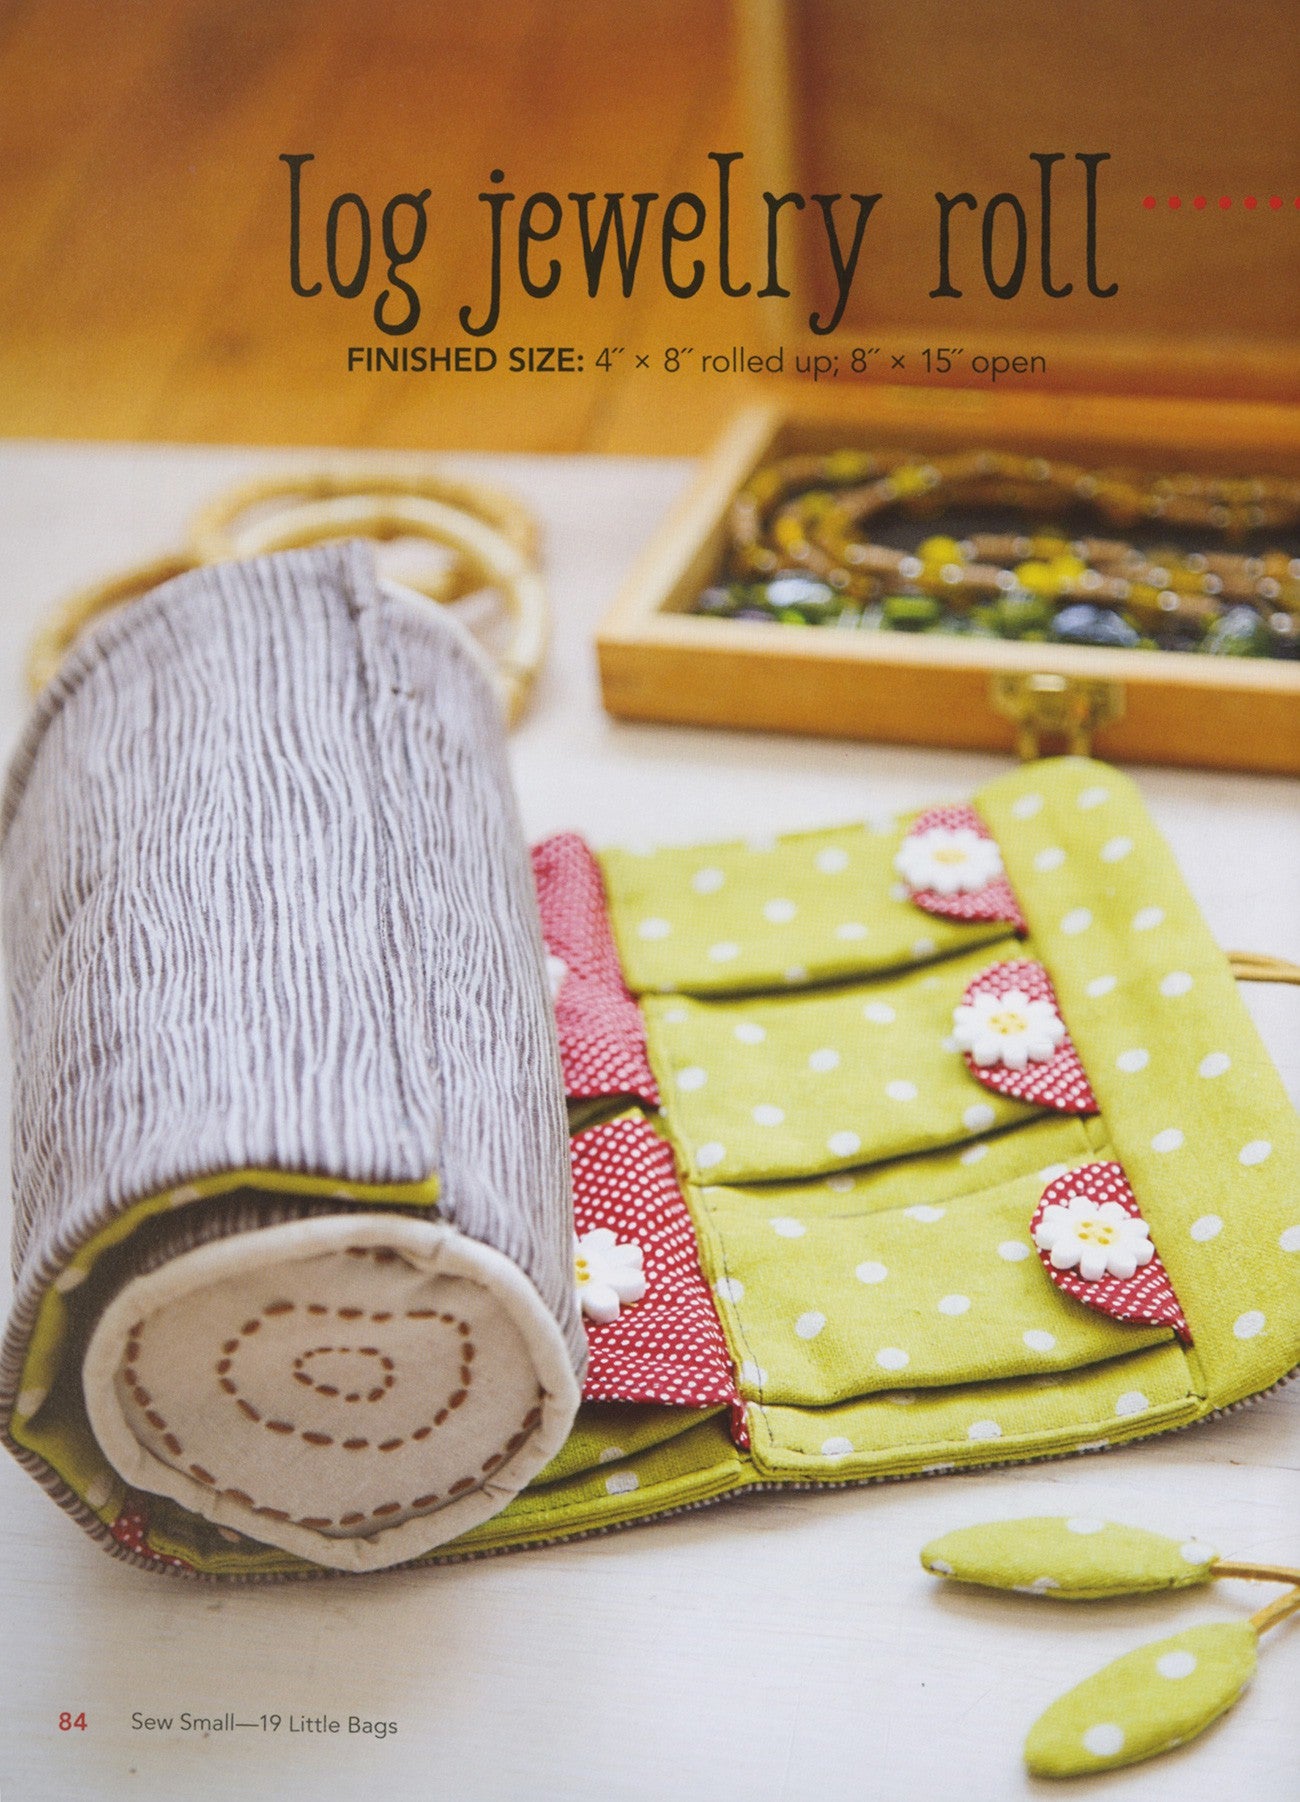 Sew Small 19 Little Bags Sewing Pattern Book by Jennifer Heynen for St